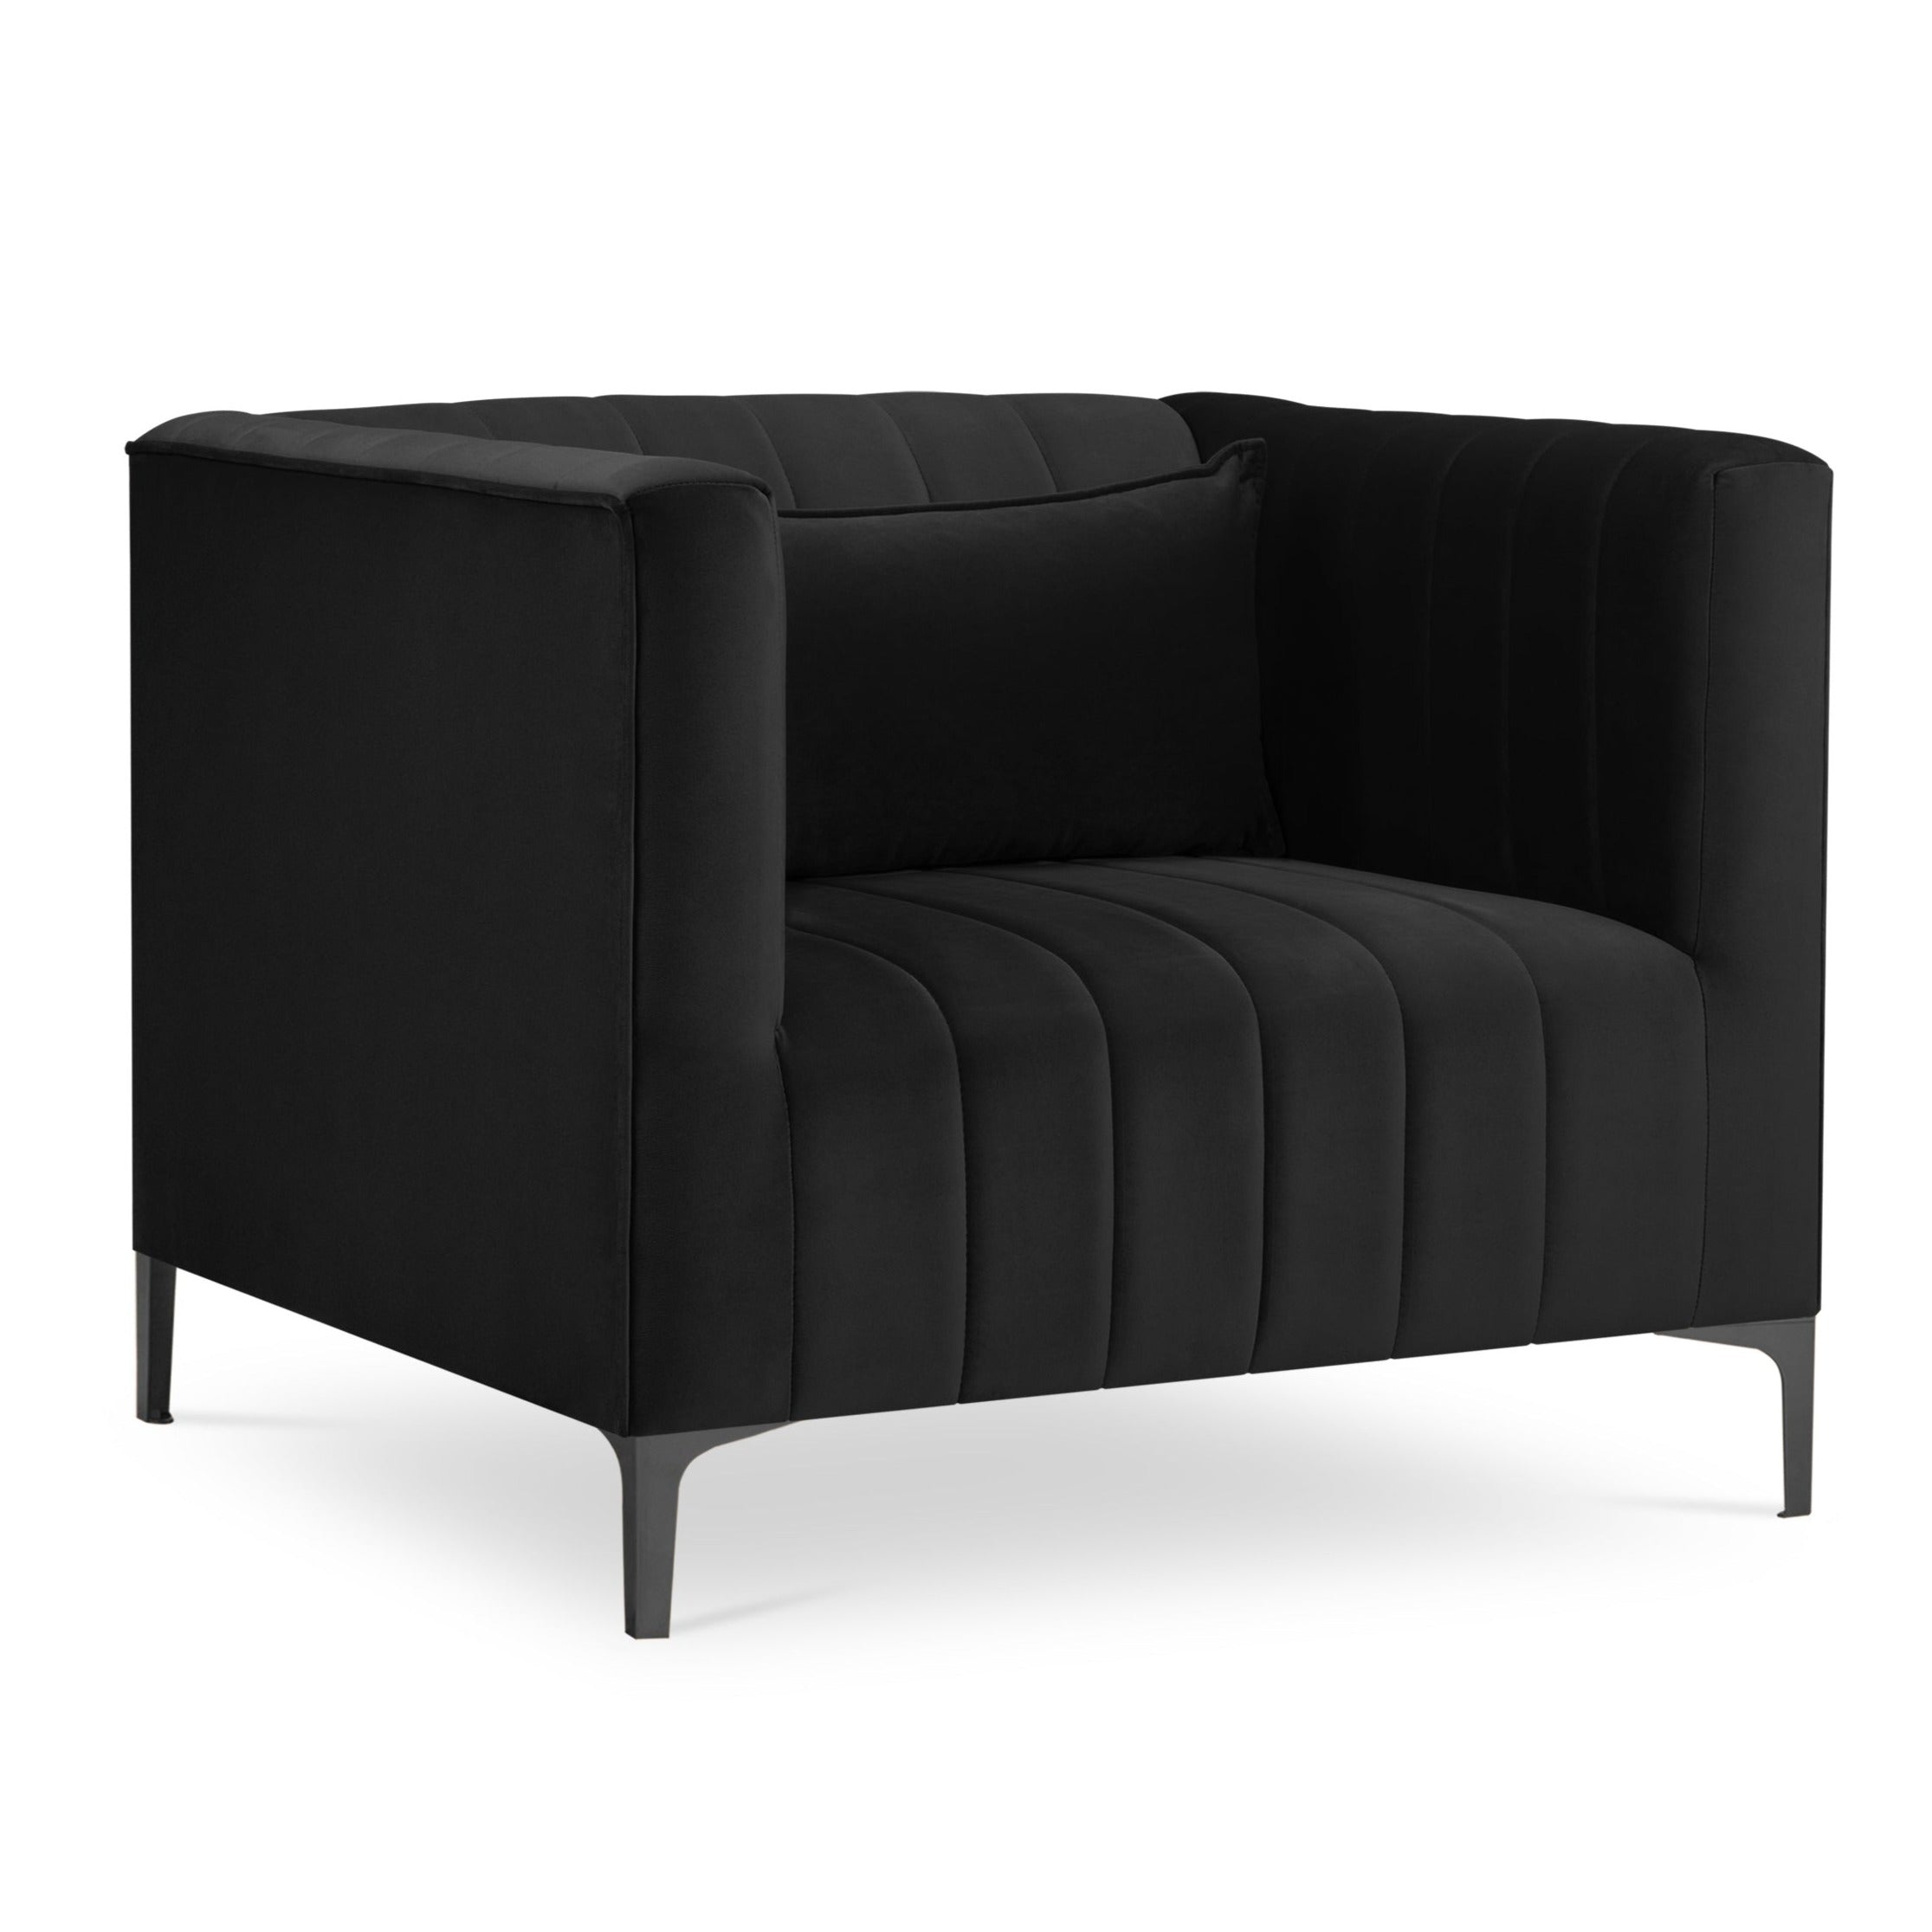 Velvet black armchair with stitching